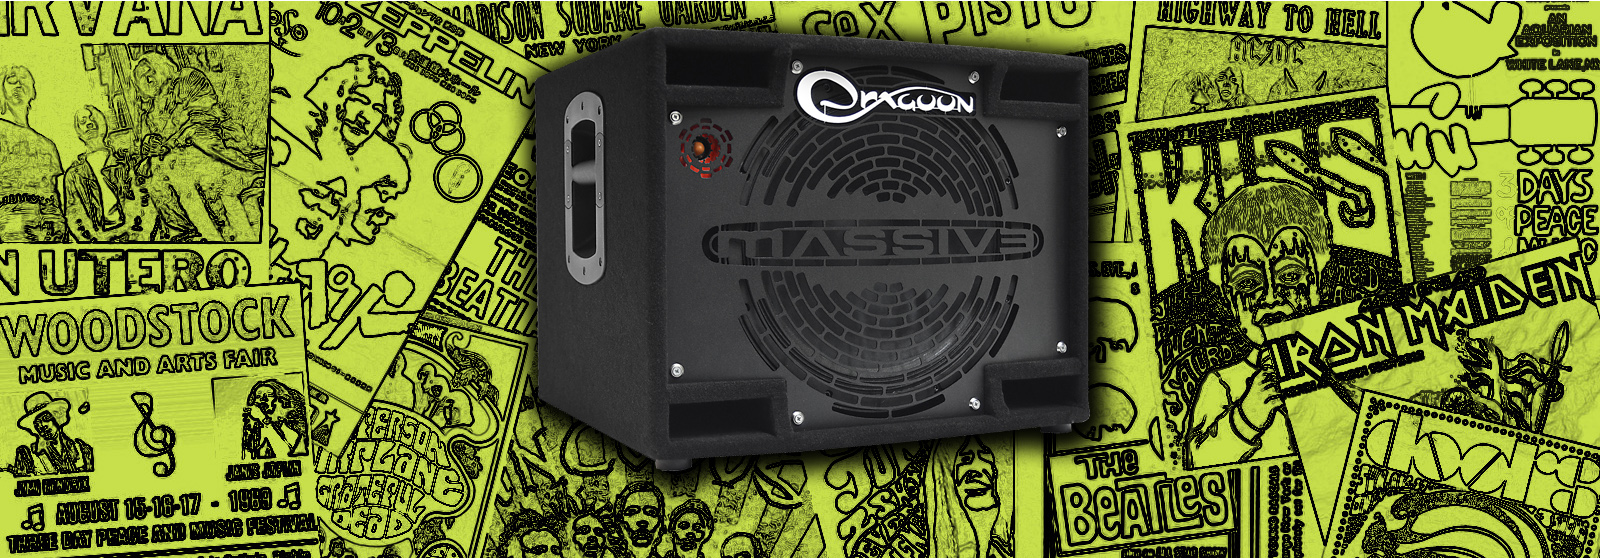 Dragoon - The Custom Speaker - DRAGOON-MASSIVE®-DM4115_20160331130342498831.jpg